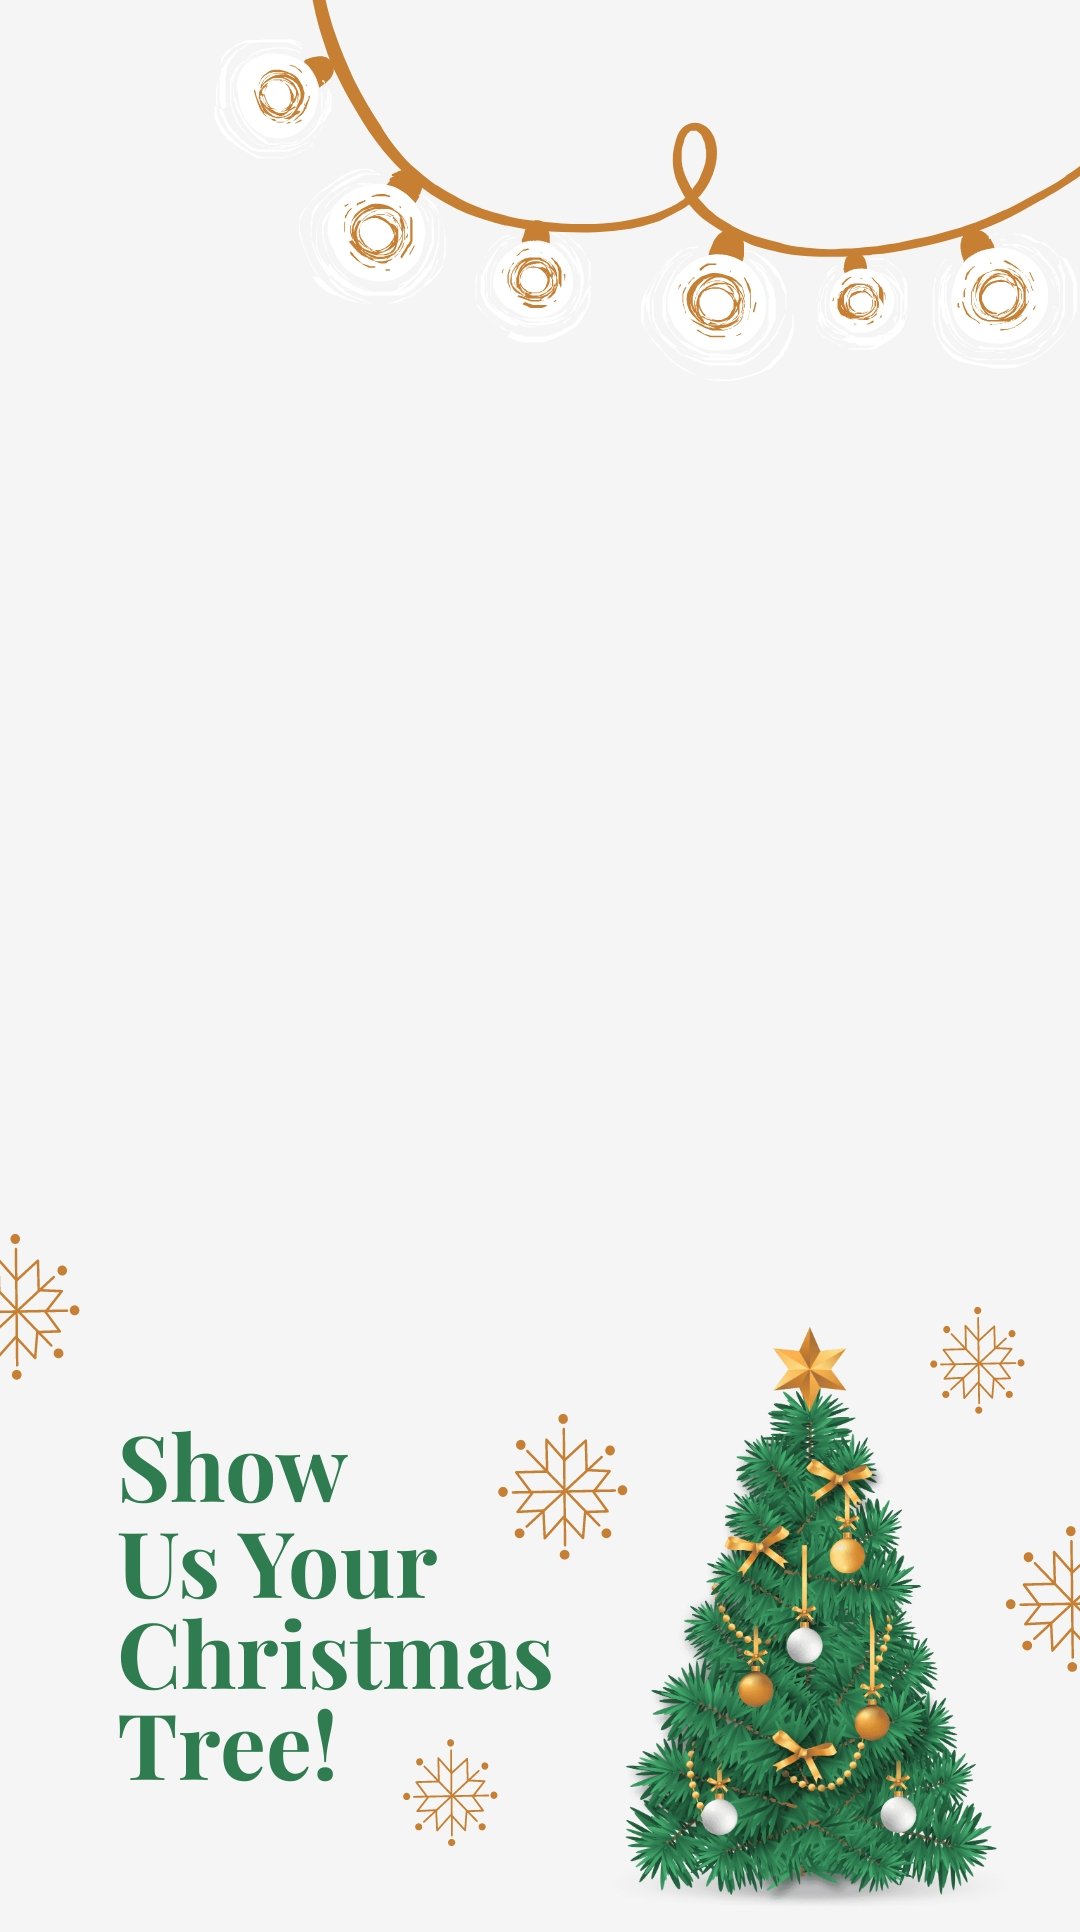 Free Christmas Tree Snapchat Geofilter Template